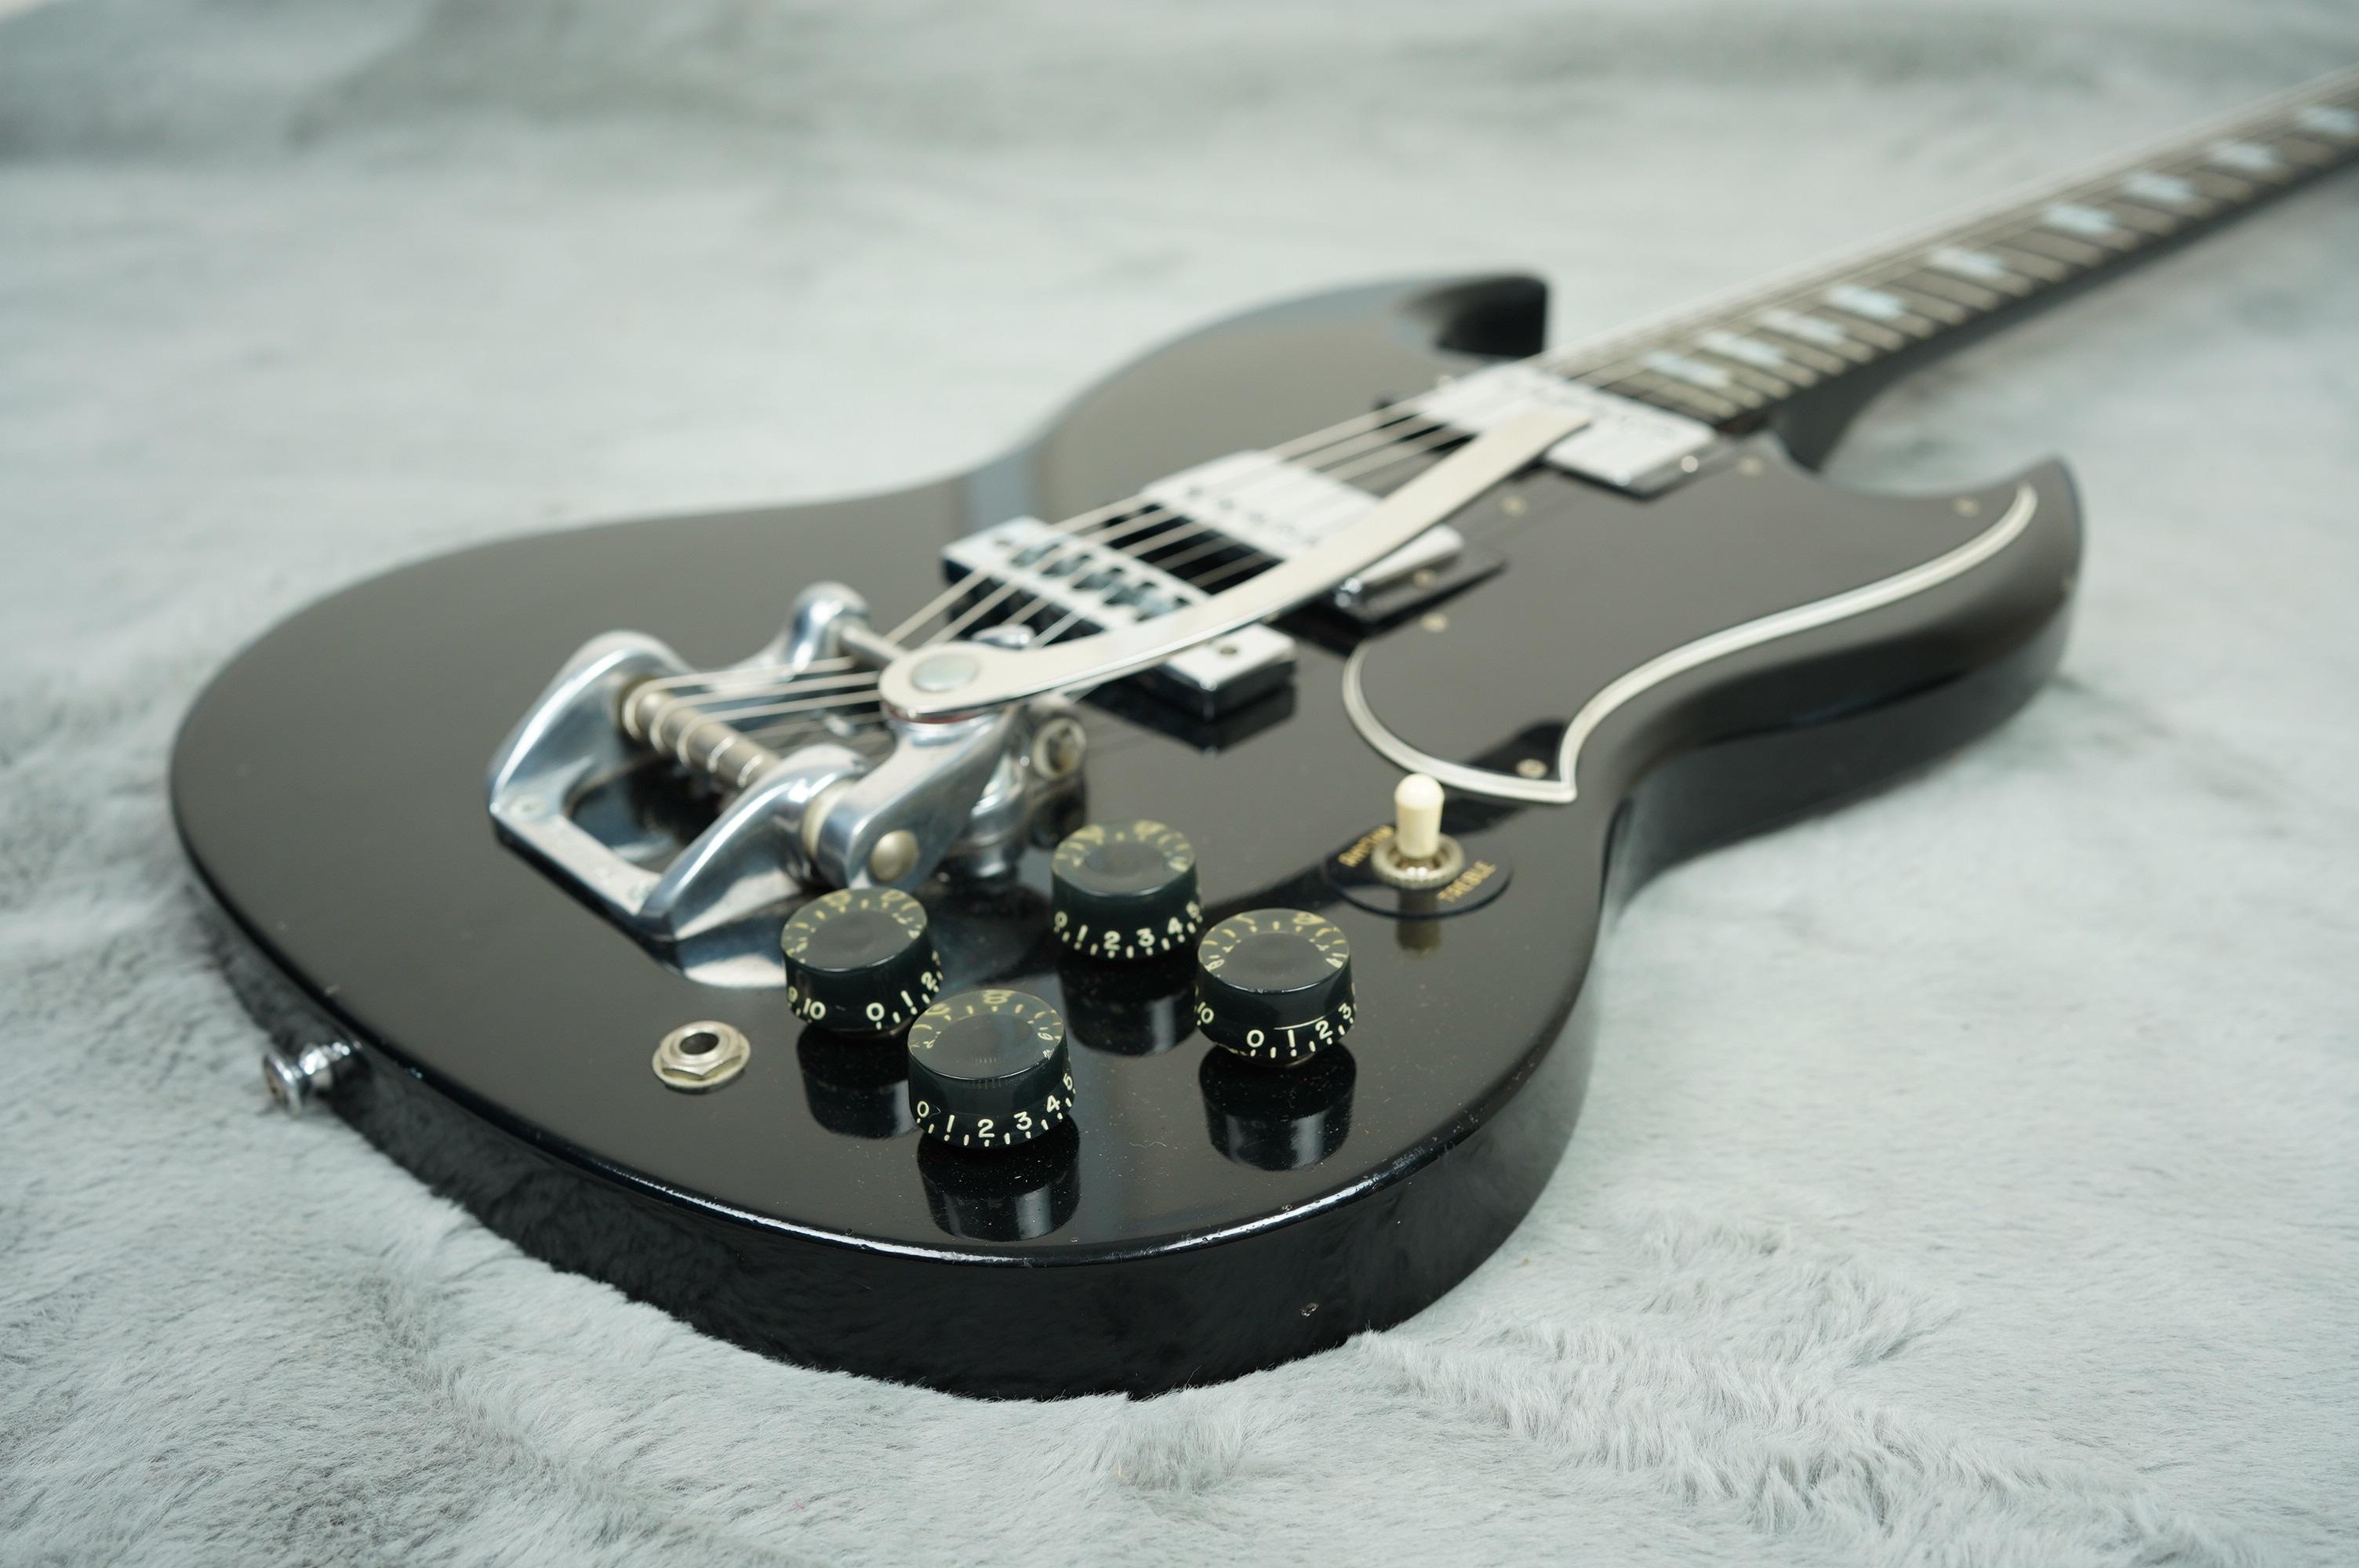 1974 Gibson SG Standard Factory Black